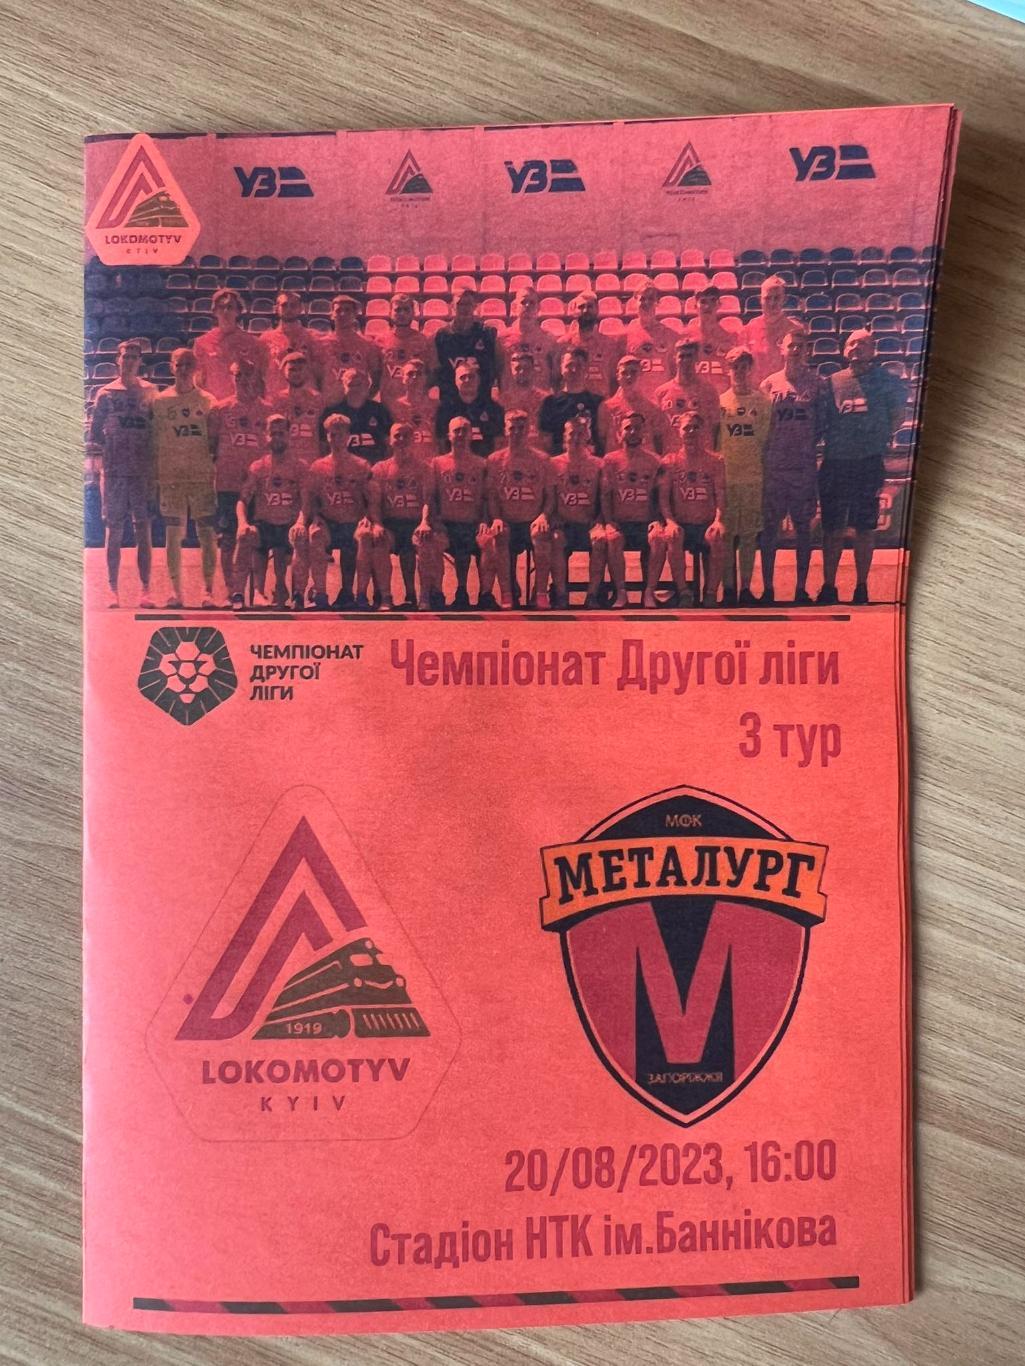 Локомотив Киев - Металлург-2 Запорожье 2023-2024